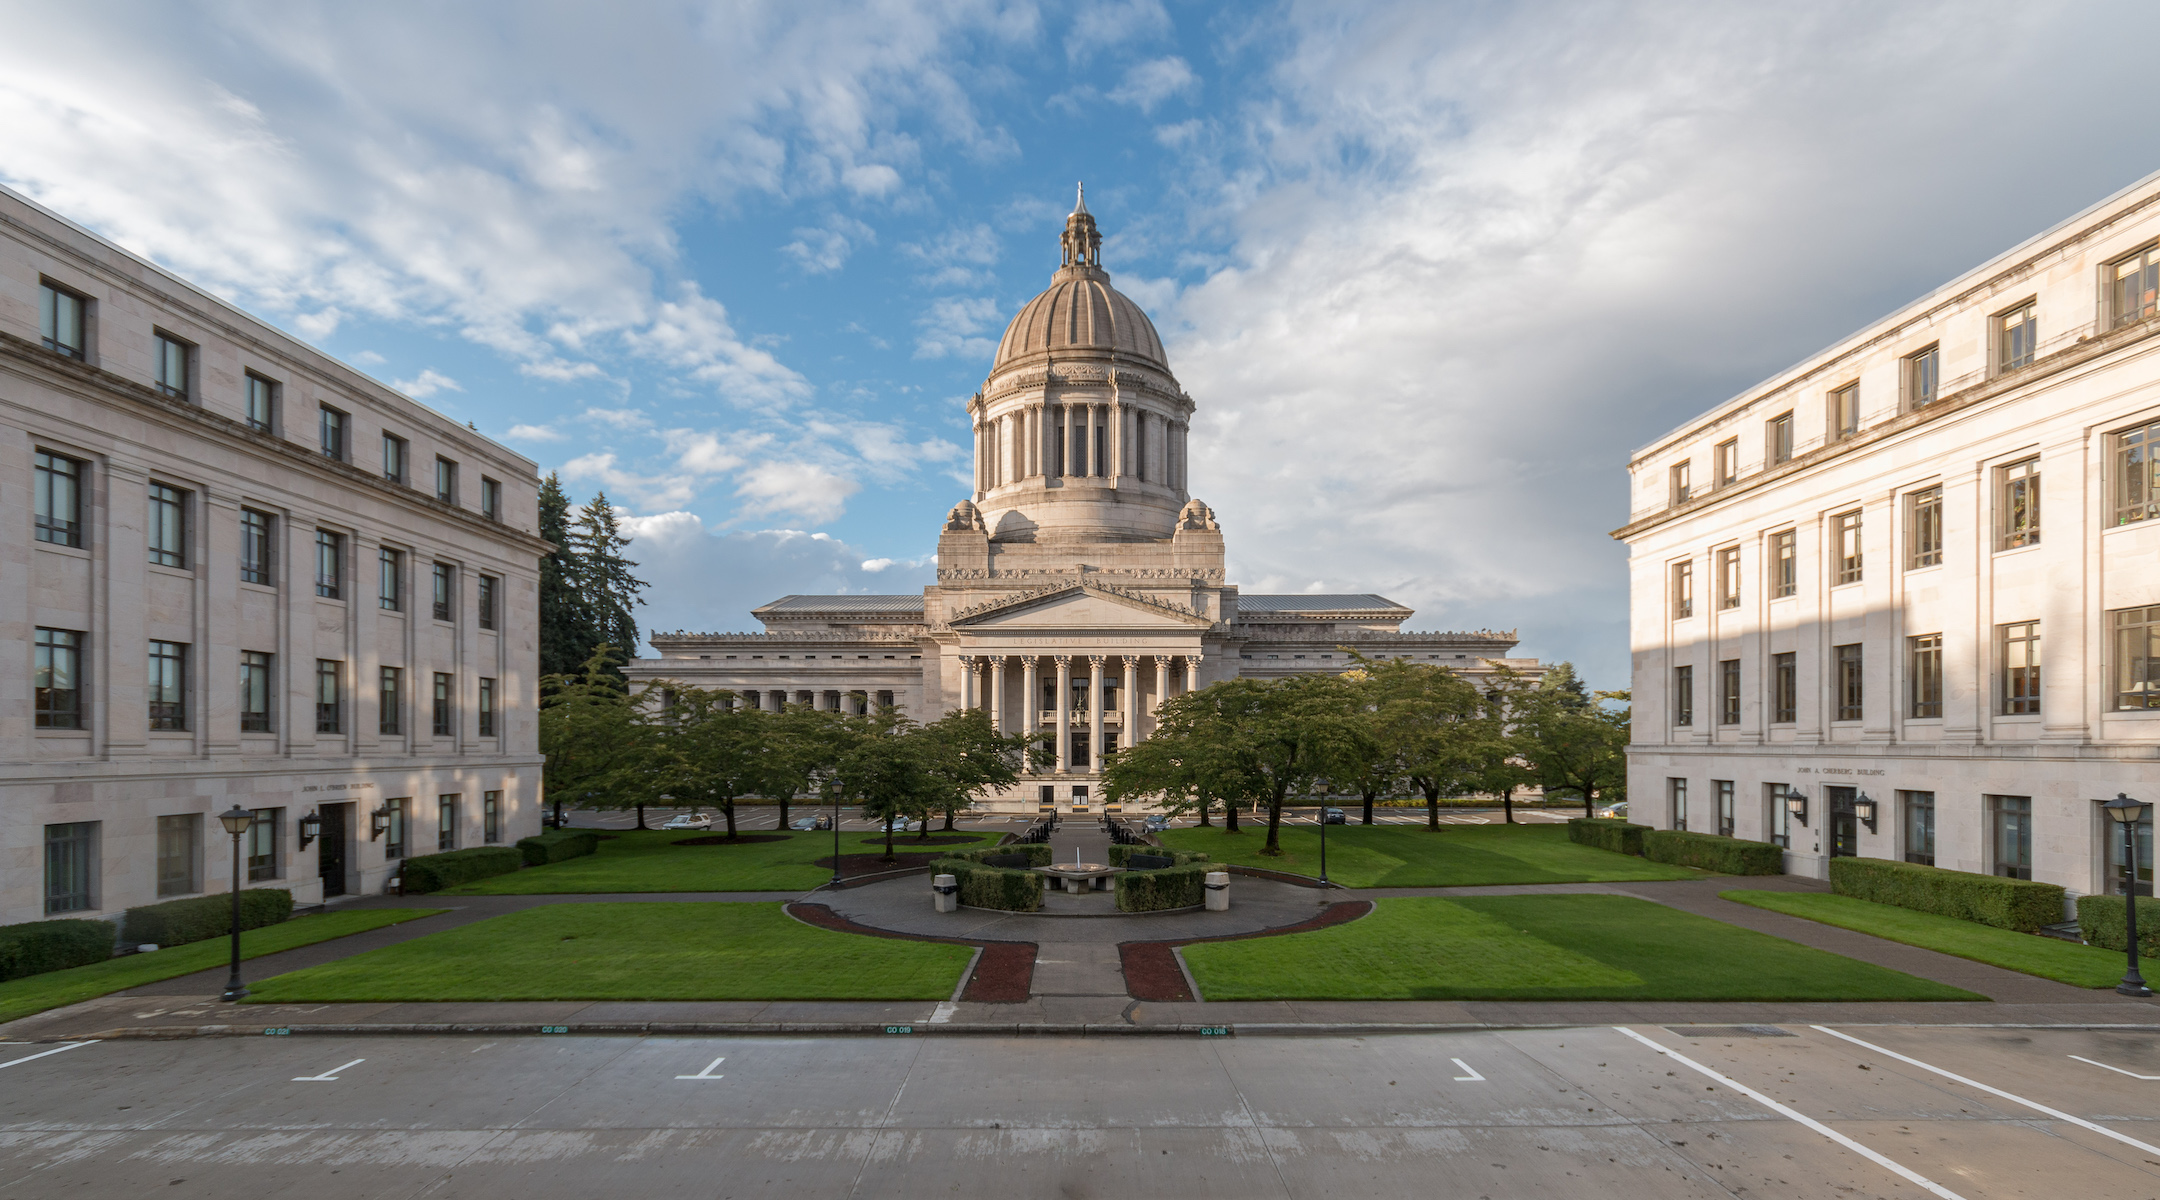 The Washington State Capitol legislative building in Olympia, Washington, September 23, 2013. (Martin Kraft via Creative Commons)